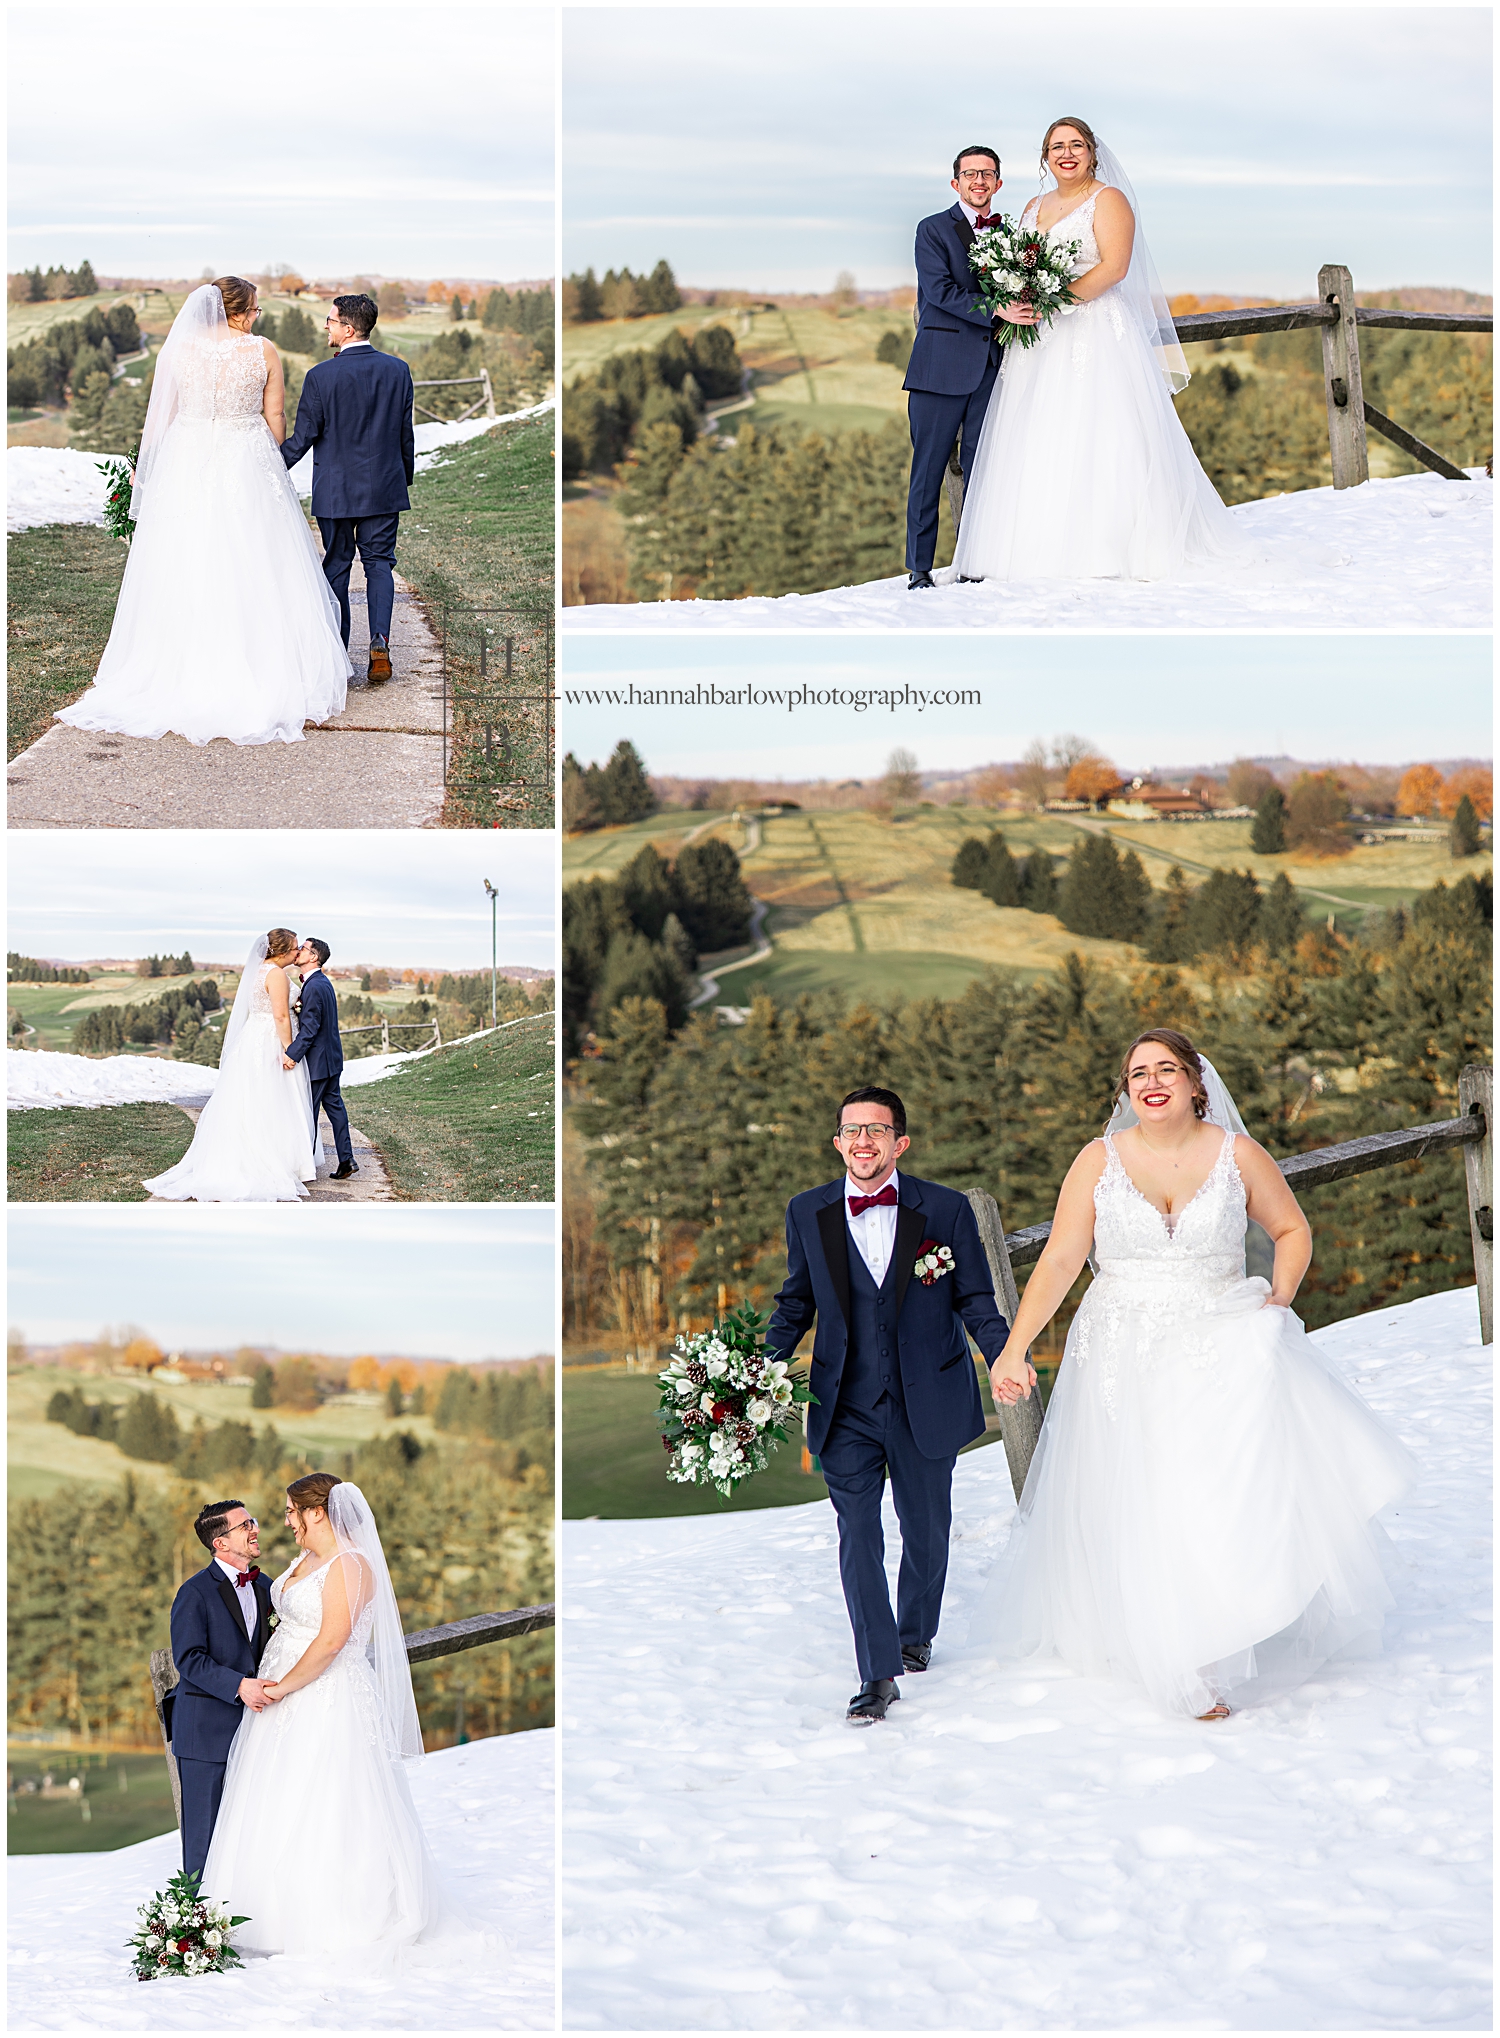 Bride and groom walk in snow